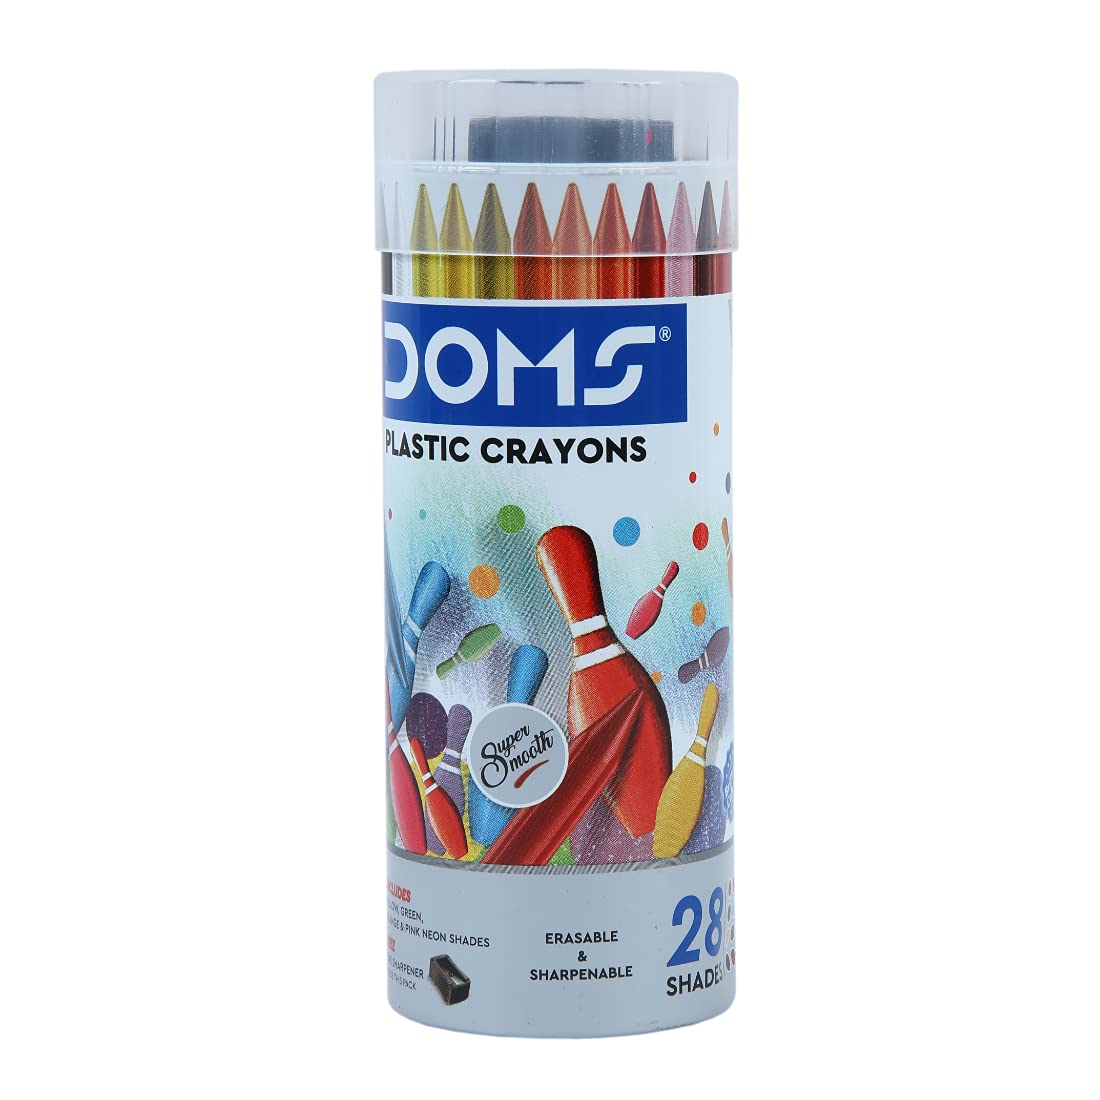 DOMS Non-Toxic Erasable Plastic Crayon Set (28 Shades x 2 Set)